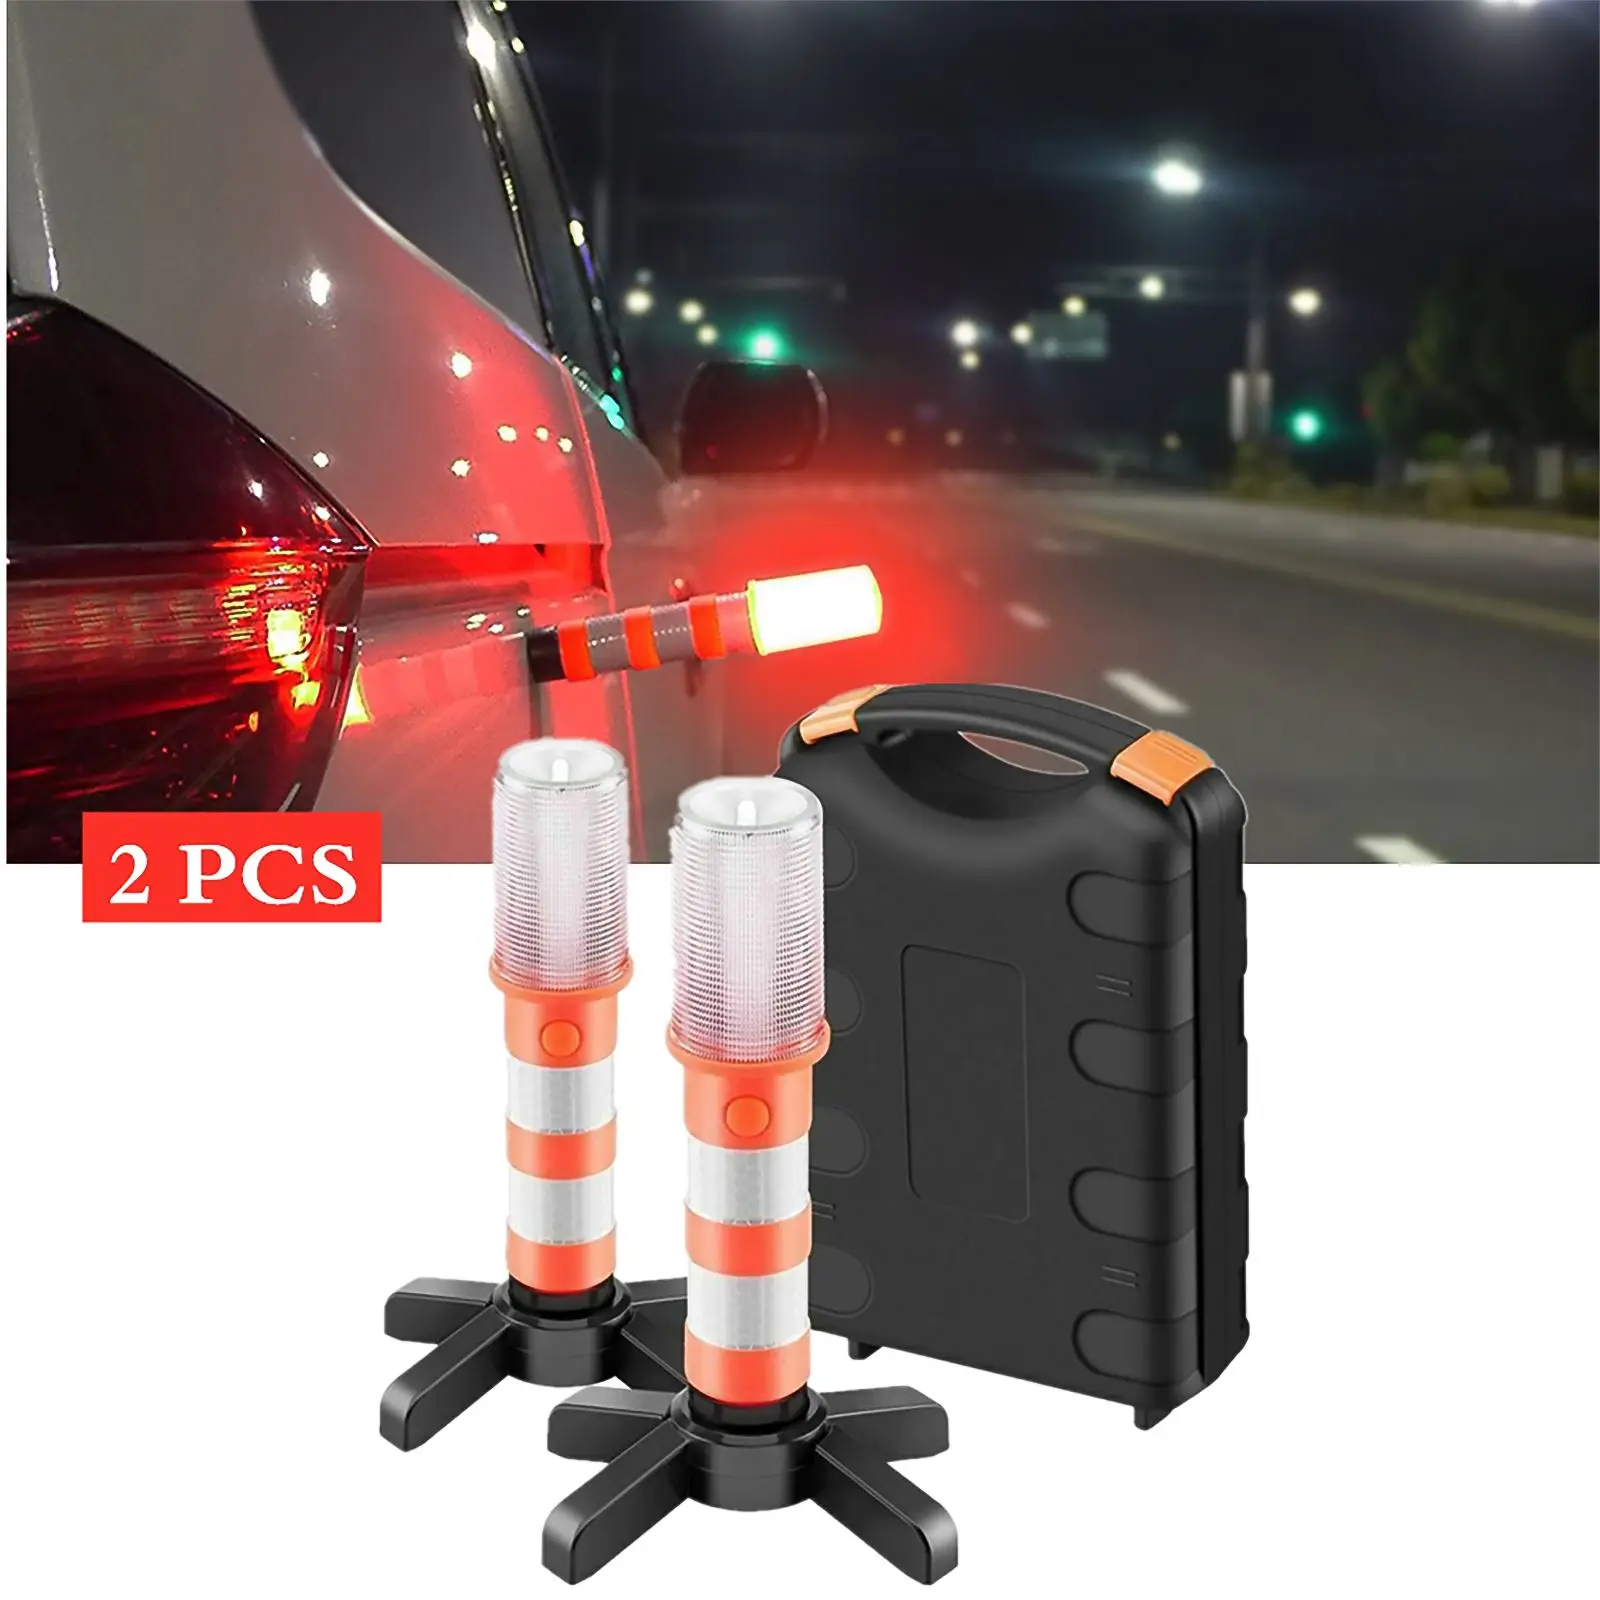 

2pc LED Flashlight Emergency Camping Roadside Flares Detachable Stand Beacon Safety Strobe Light Warning Signal Alert SOS Lamps